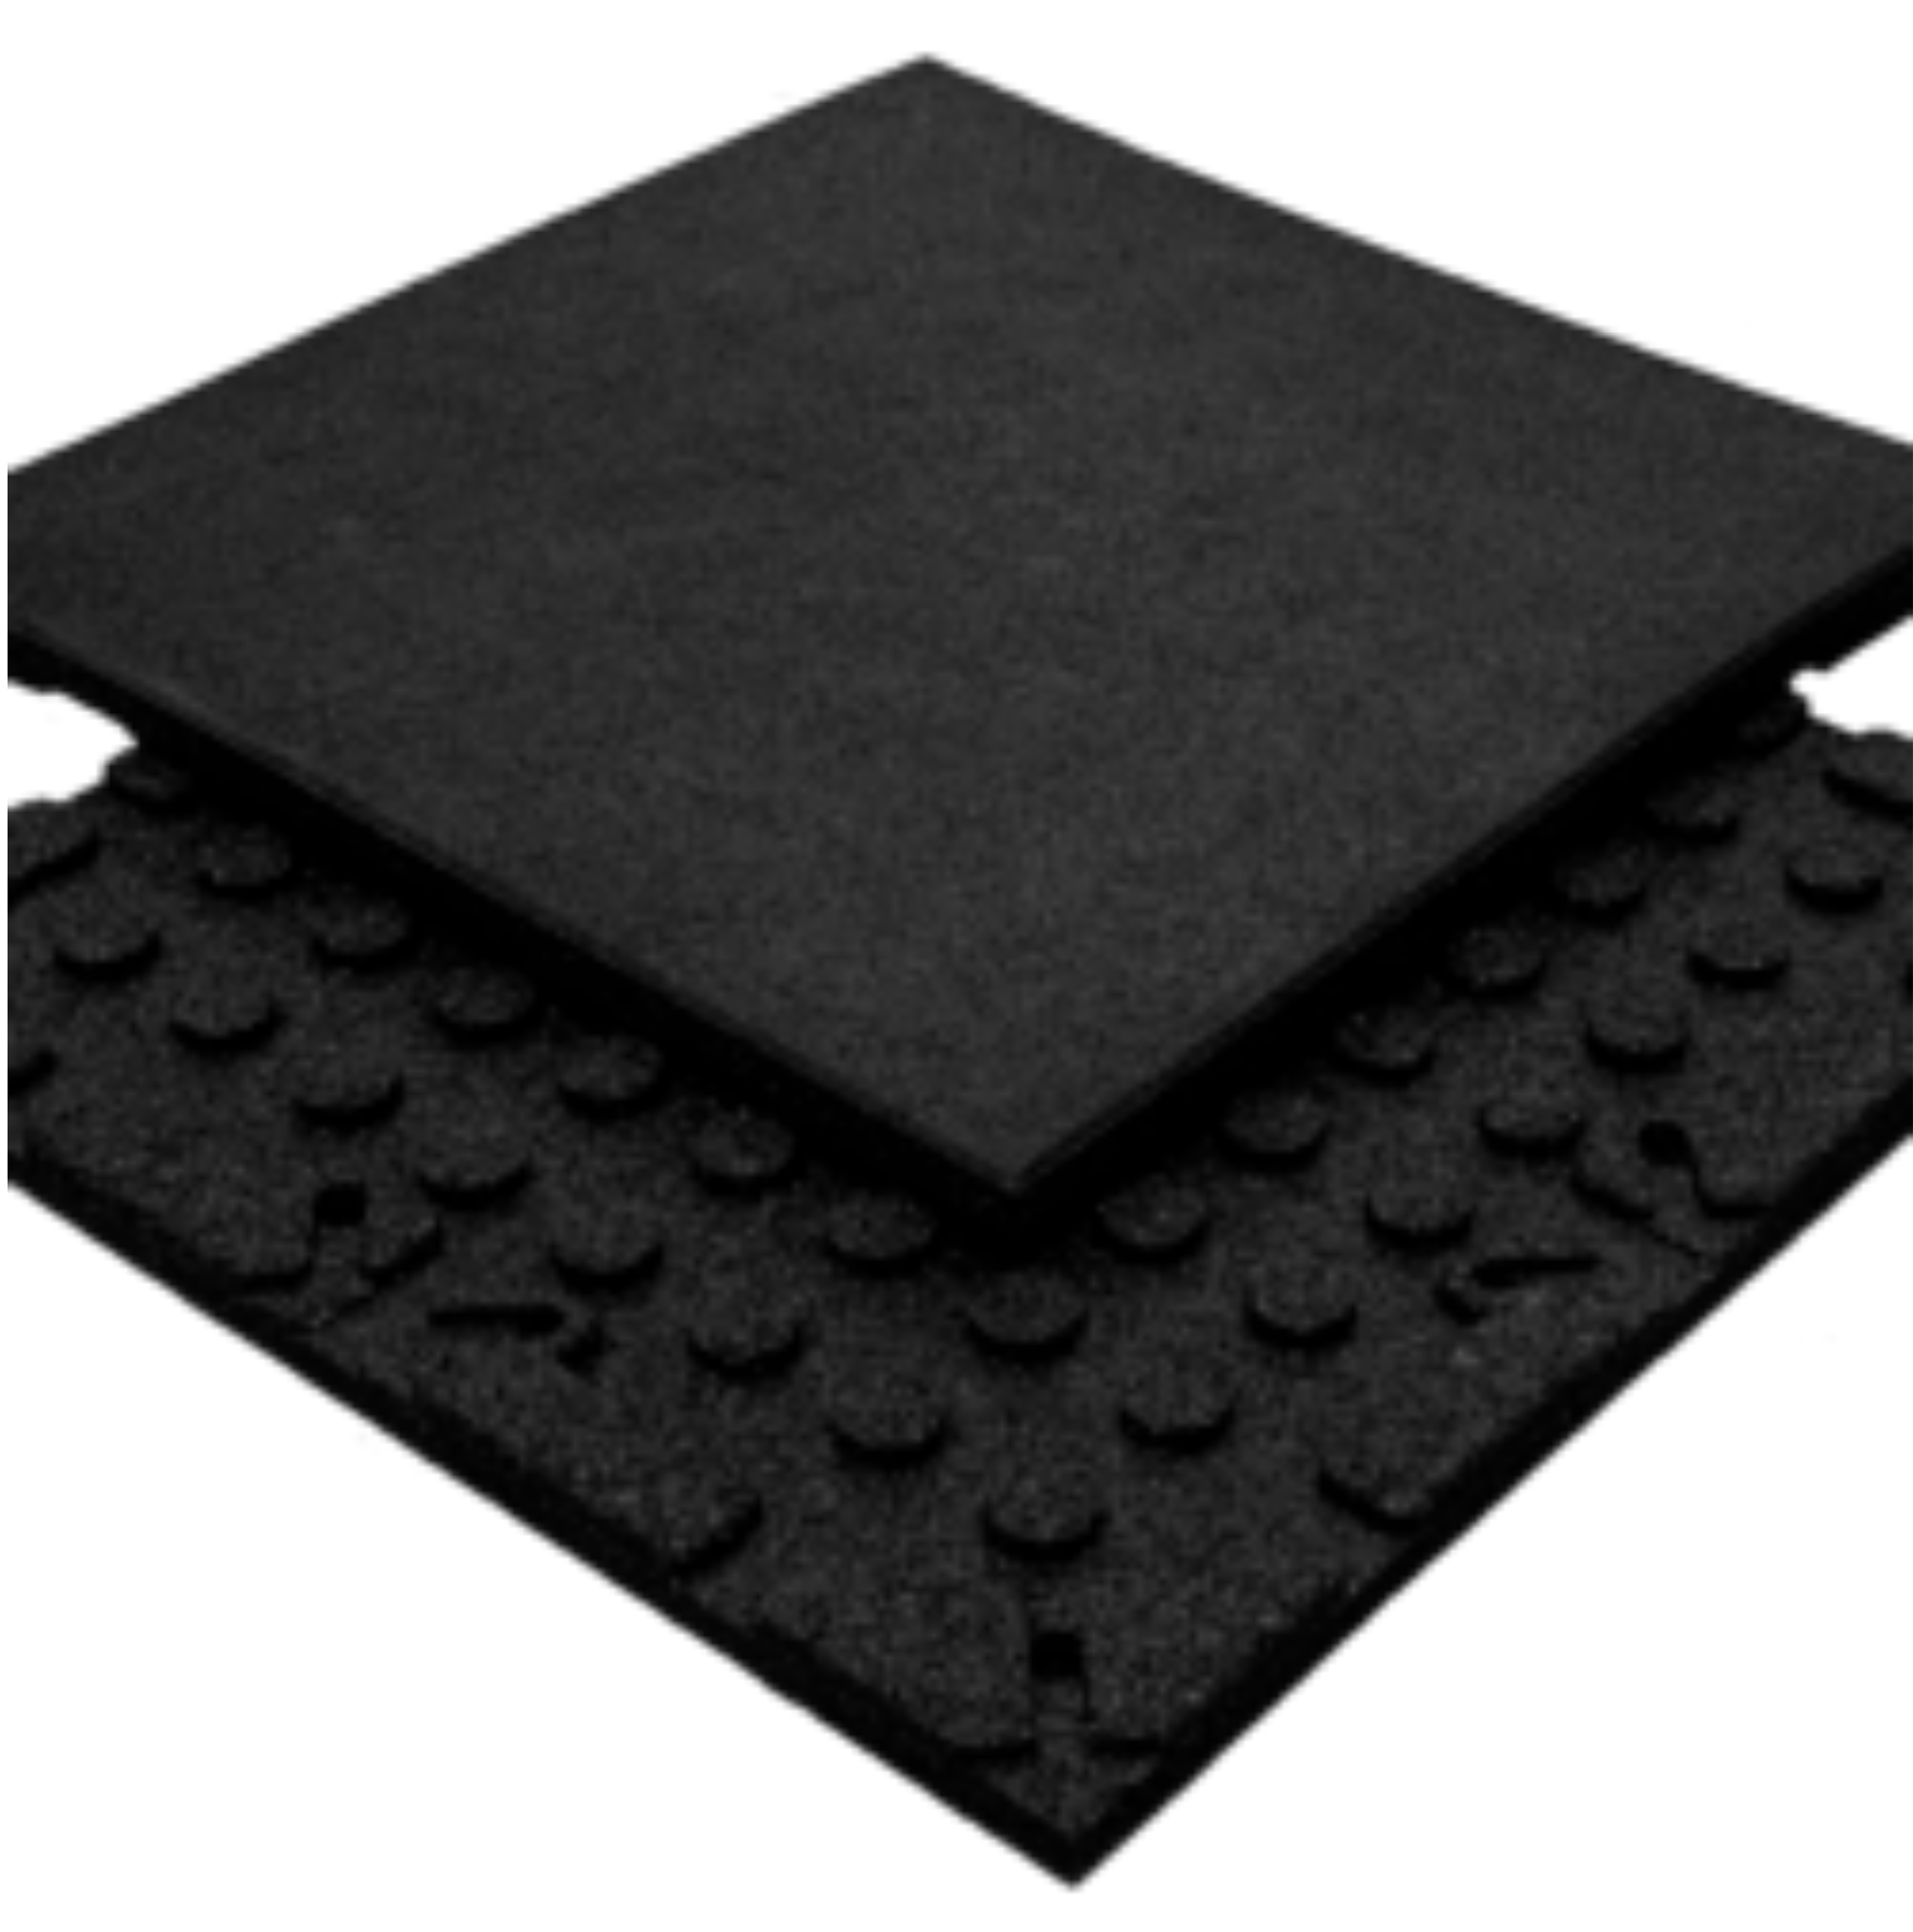 GatorSHOCK® – High Performance Tiles 2' x 2' / Thickness 30mm $25 Per Tile